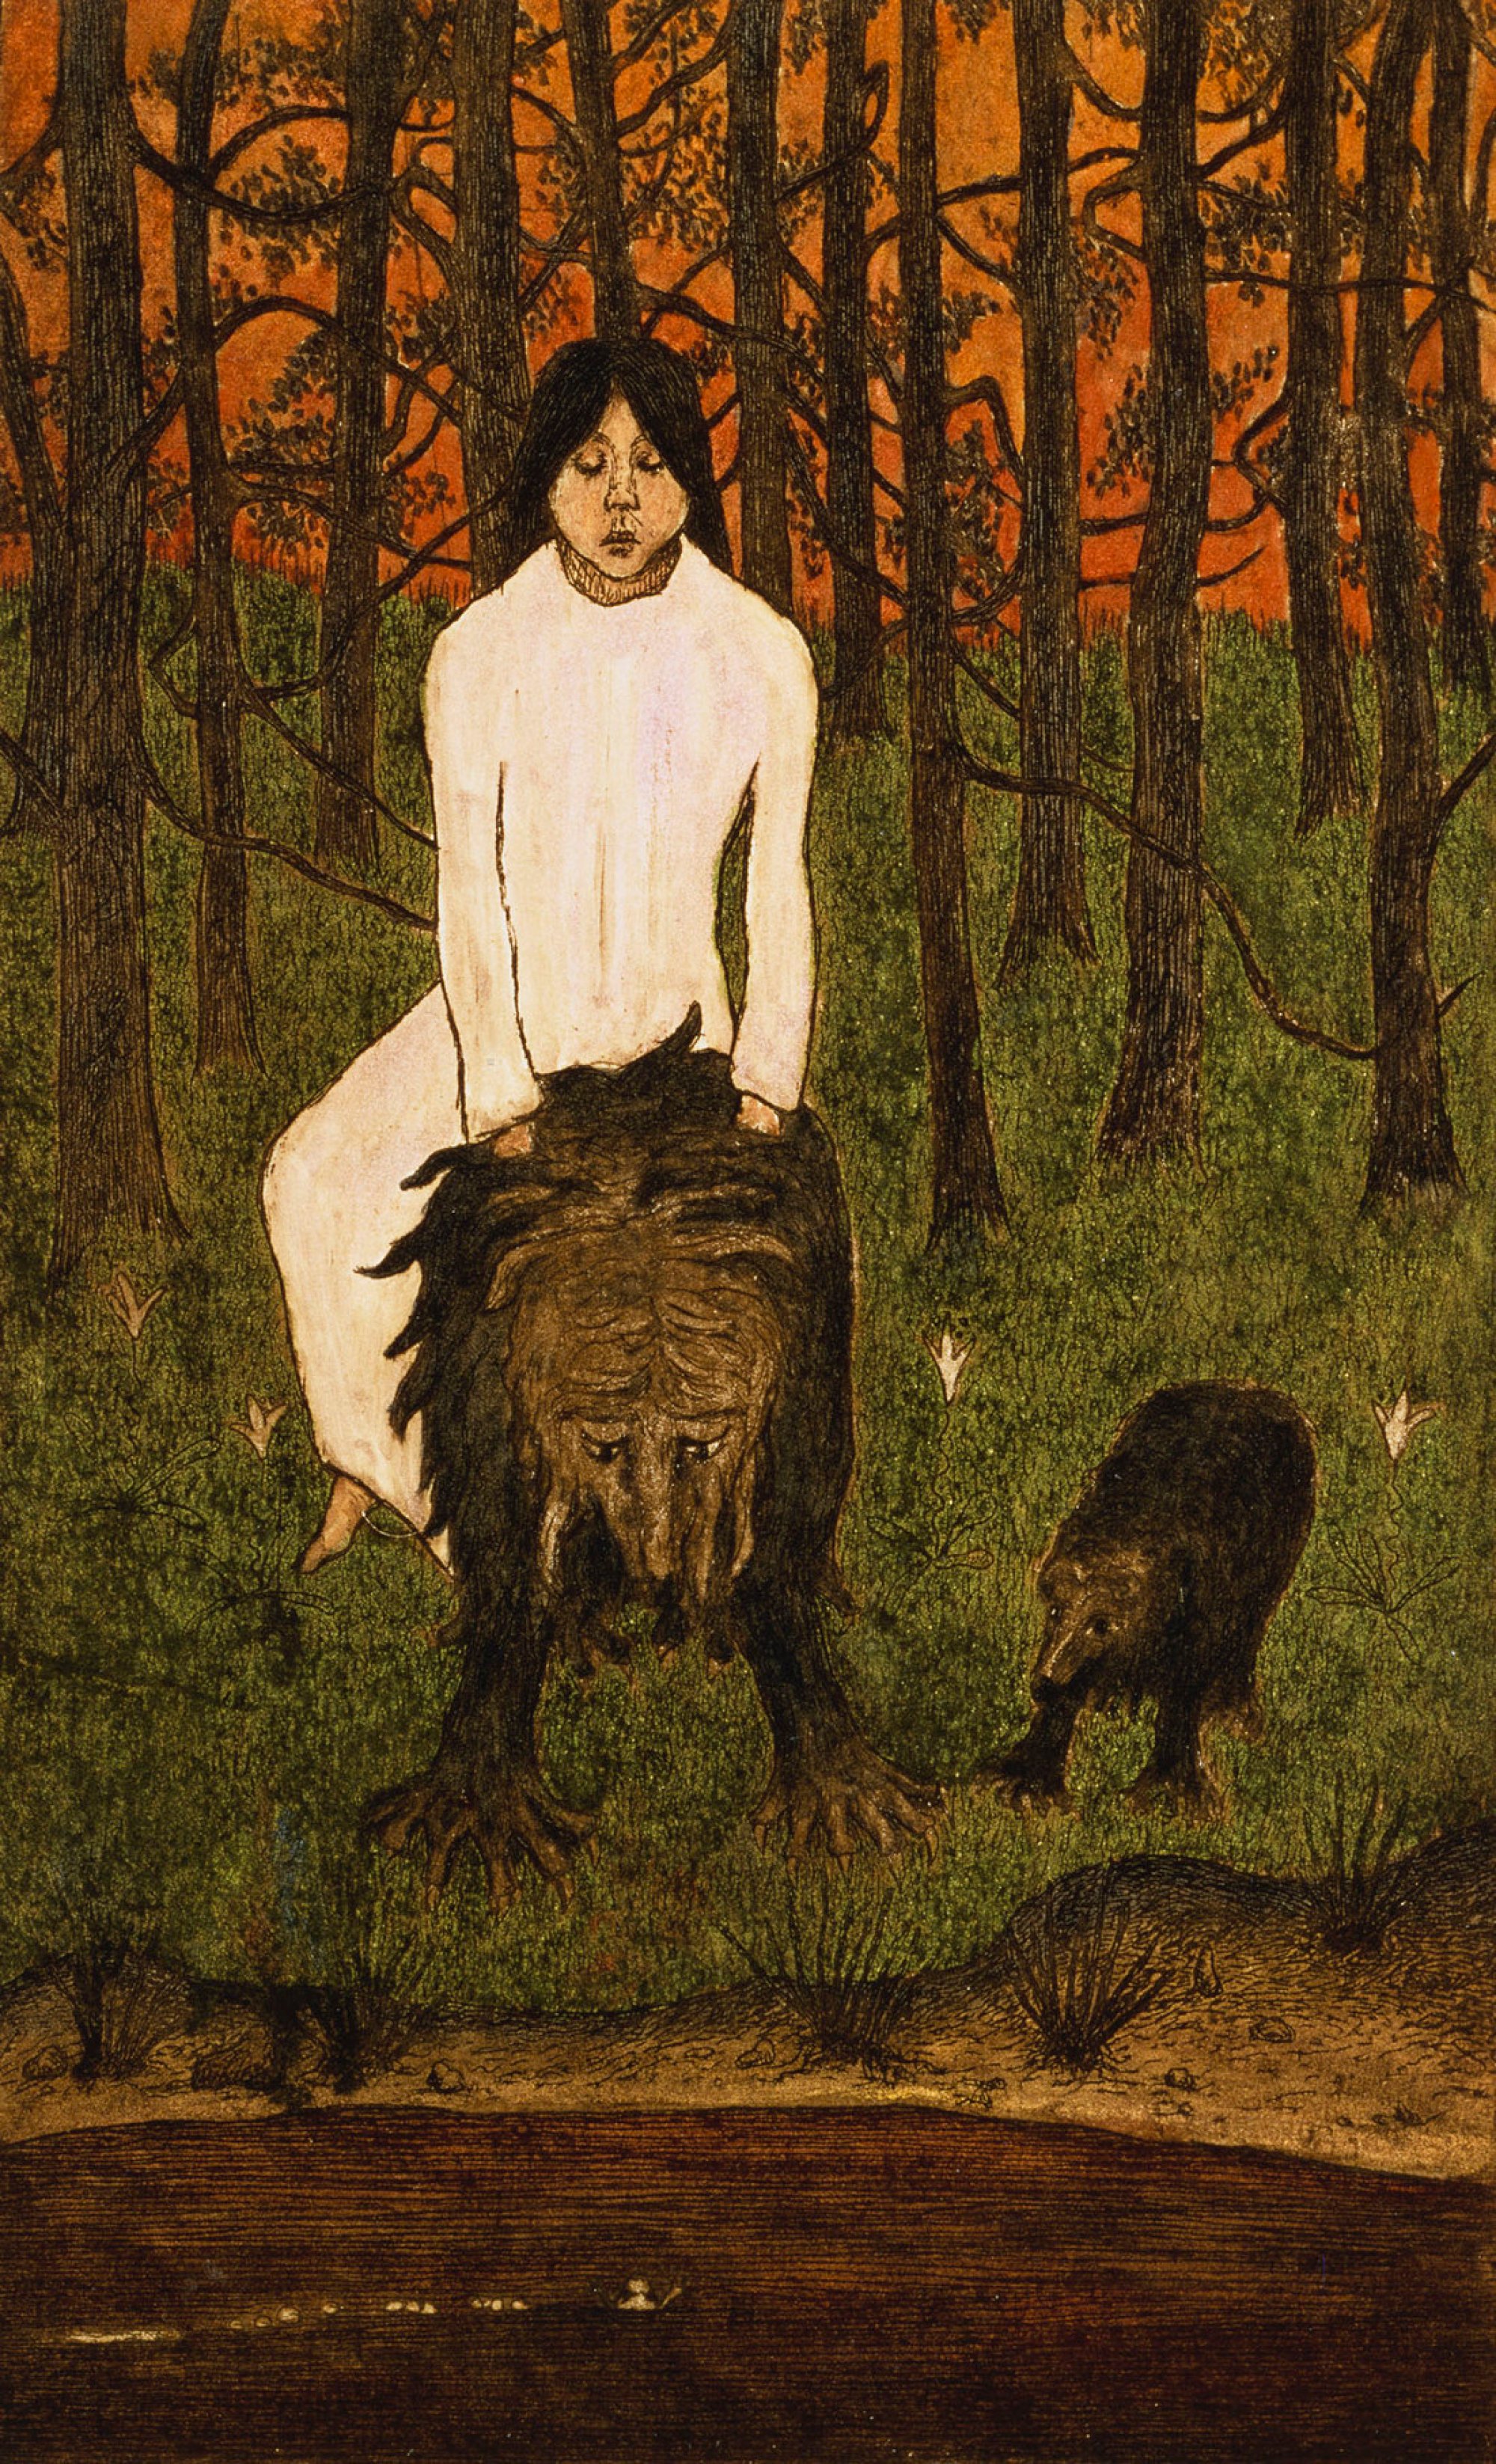 Märchen by Hugo Simberg - 1898 - 21 x 13 cm Finnish National Gallery